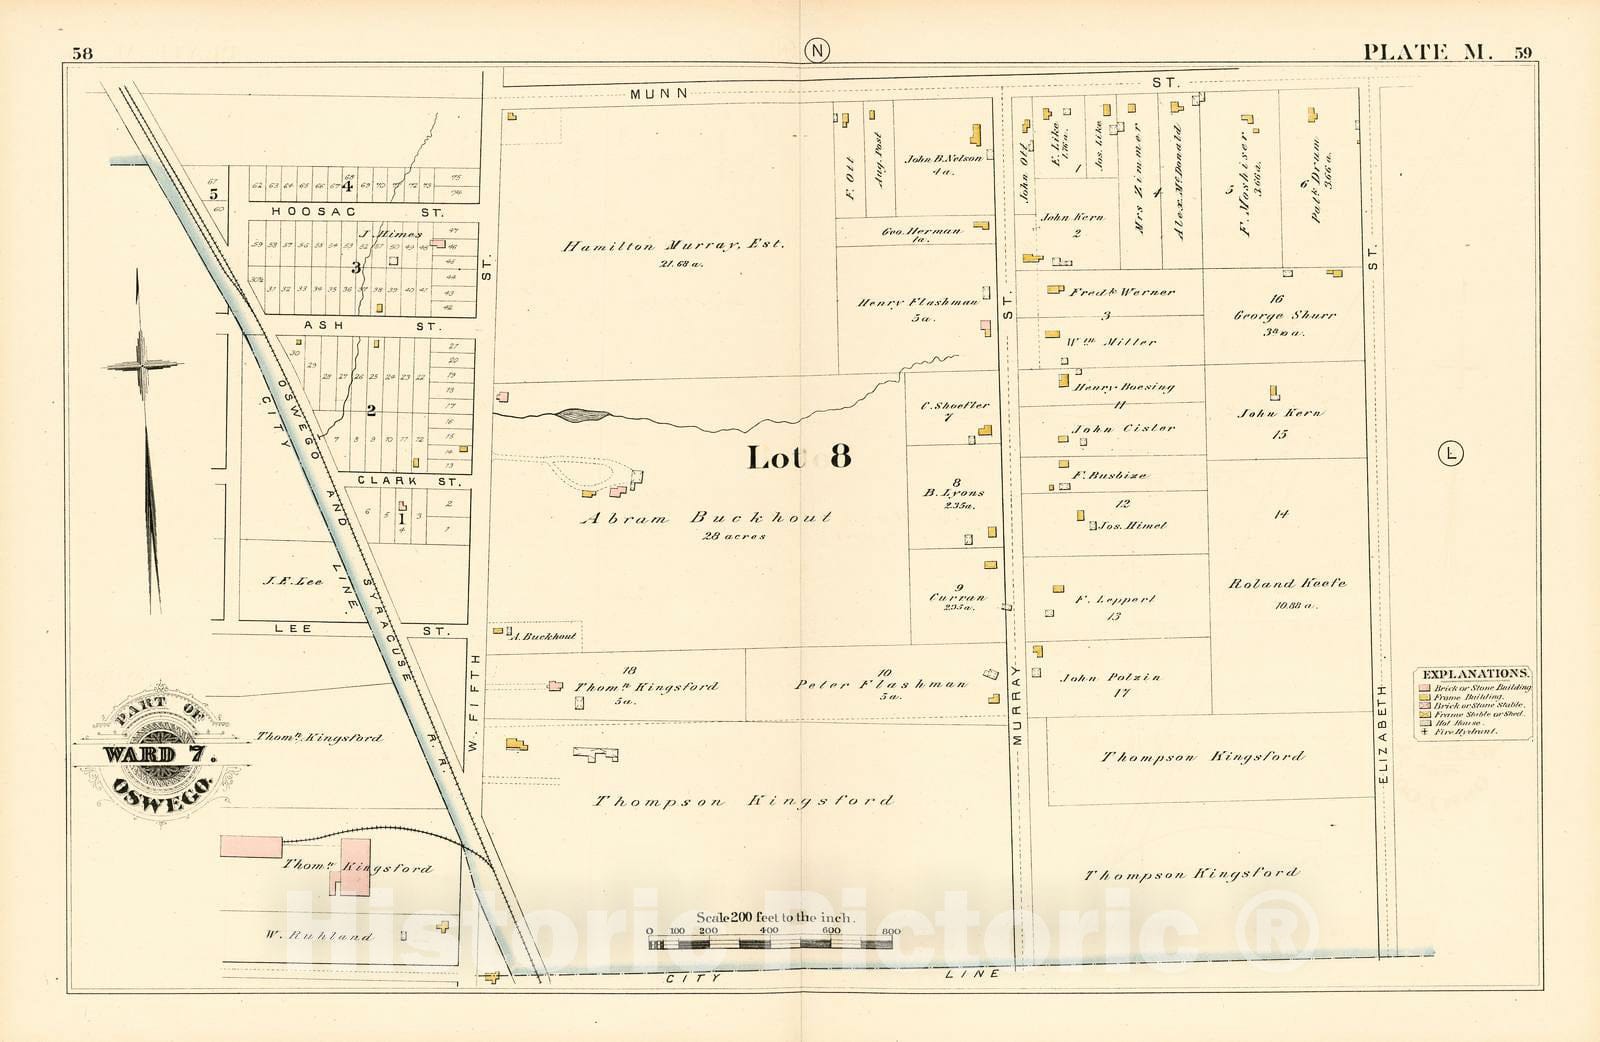 Historic 1880 Map - City Atlas of Oswego, New York - Part of Ward 7. Oswego. Plate M. - Atlas of The City of Oswego N.Y.